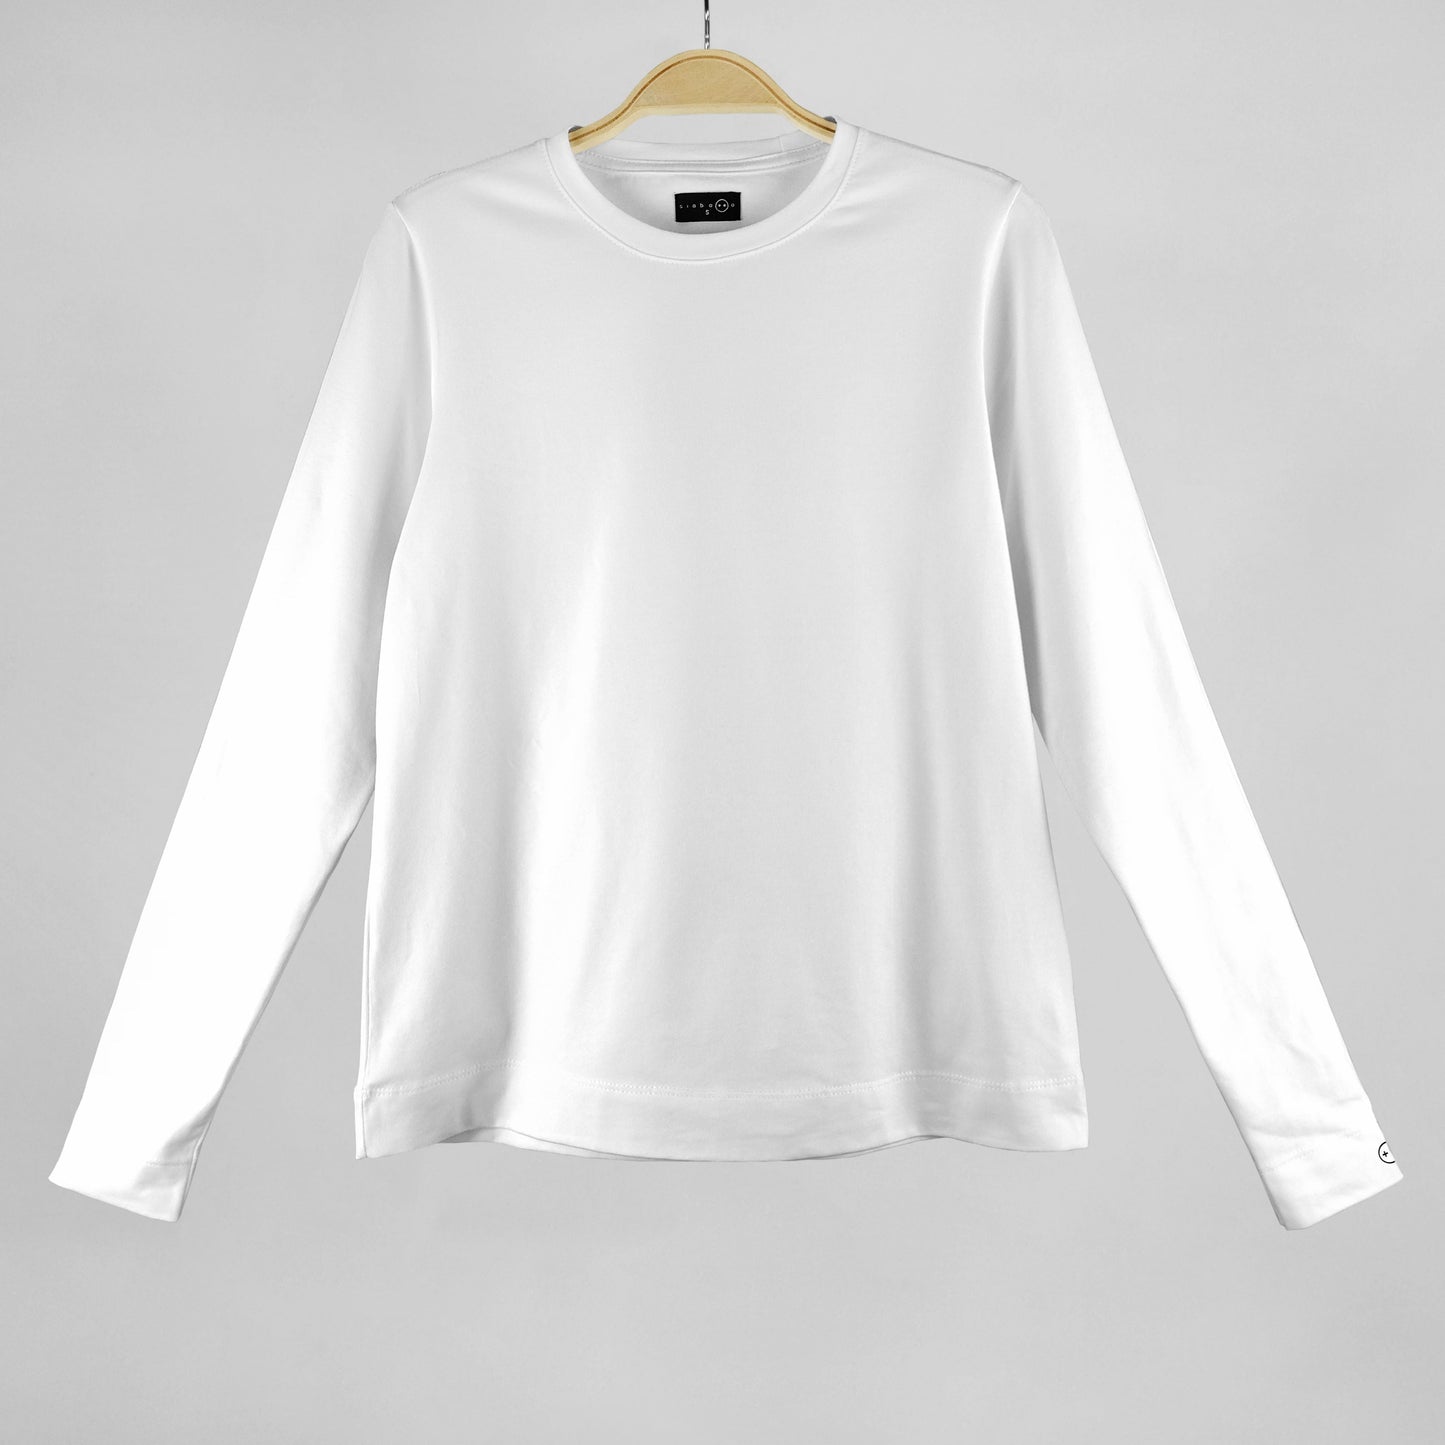 Camiseta siabatto manga larga cuello redondo color blanco